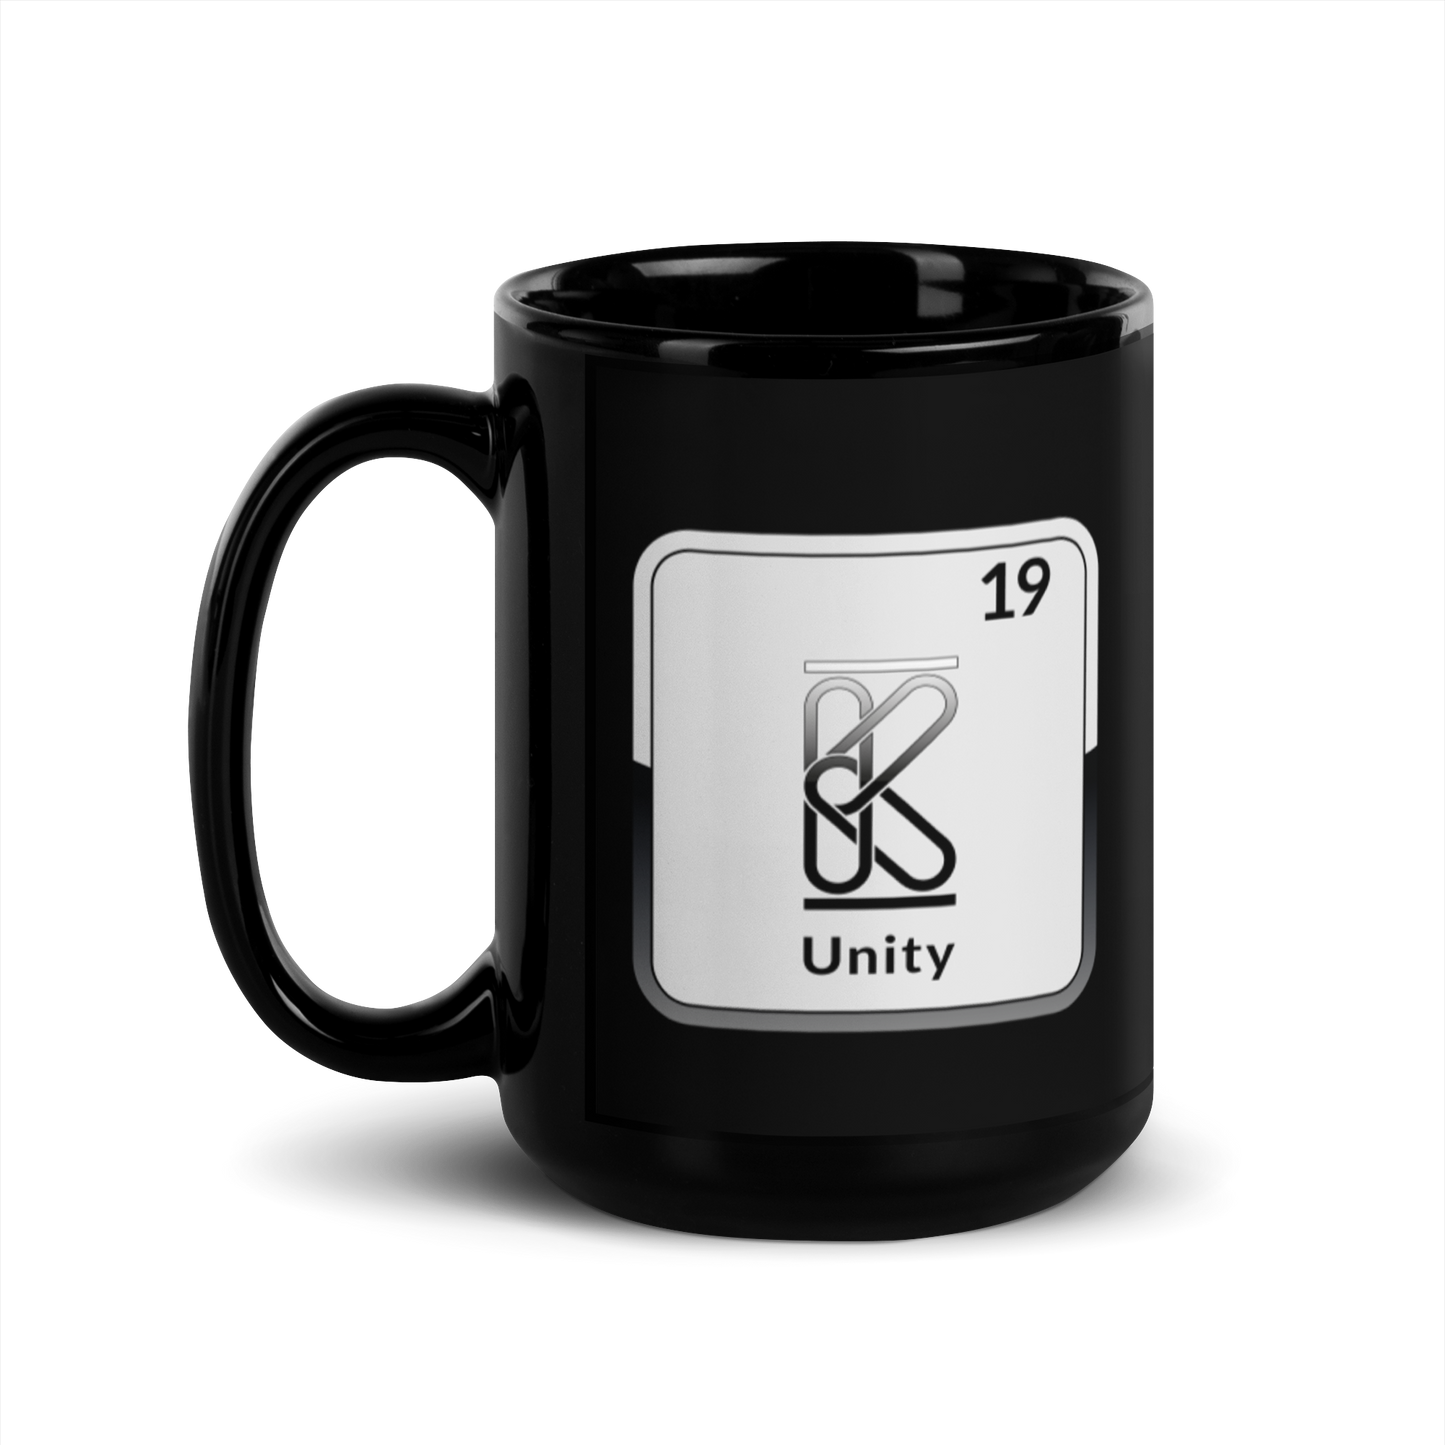 The K Element Black Glossy Mug KimUnity Soulutions 